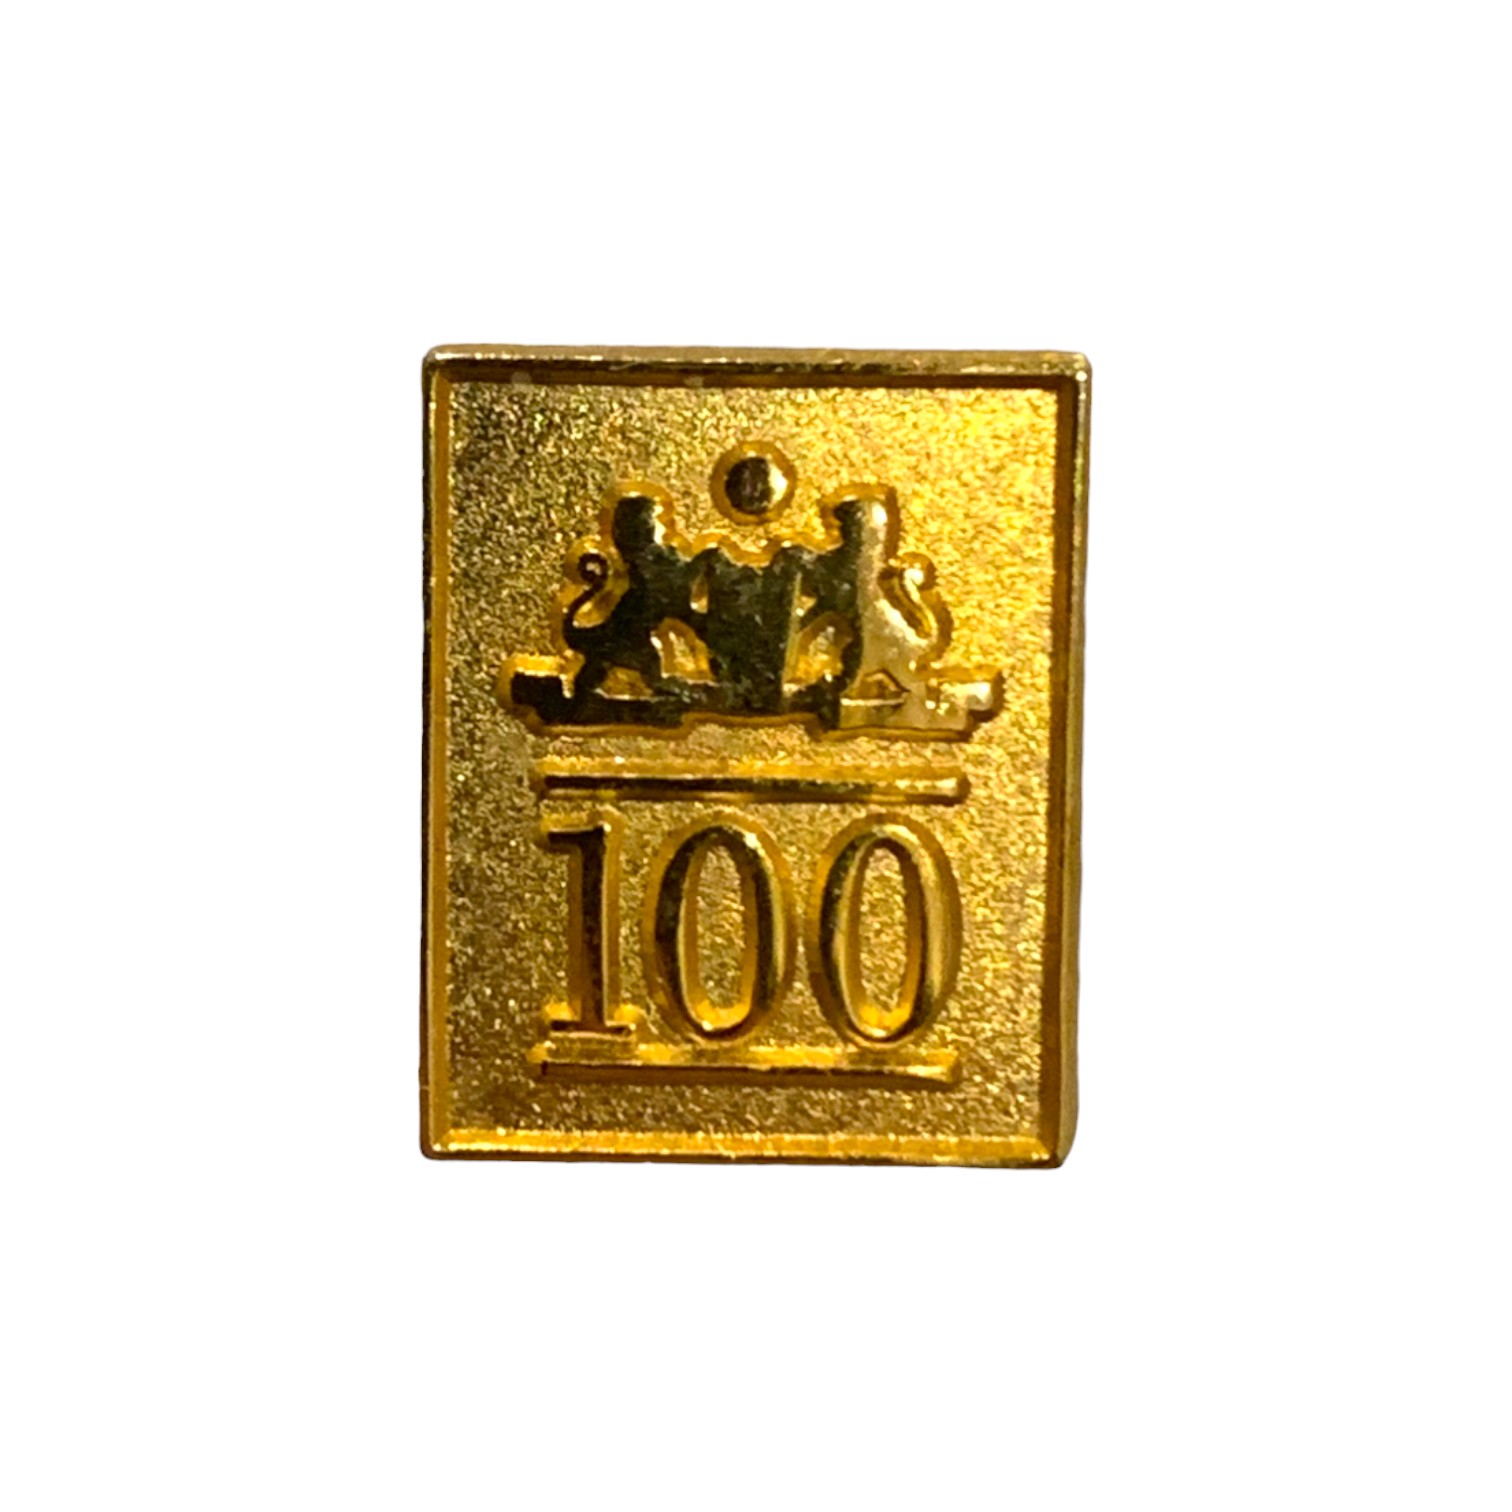 Graduate School Centennial Celebratory Gold Pin